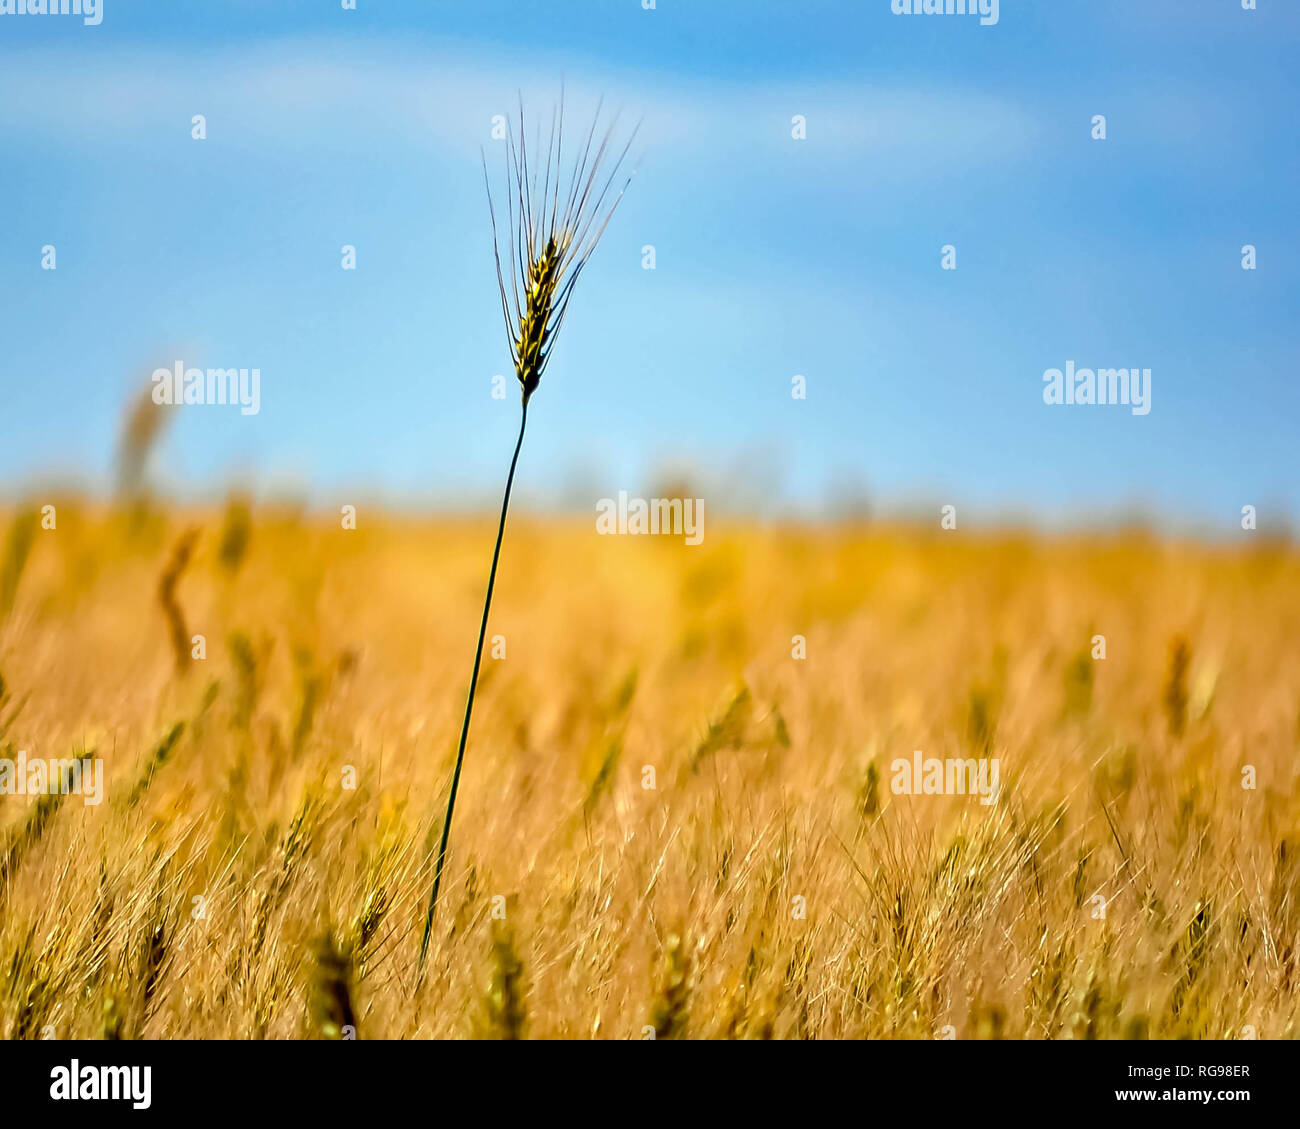 Ear of wheat in a wheat field, Alberta, Canada Stock Photo